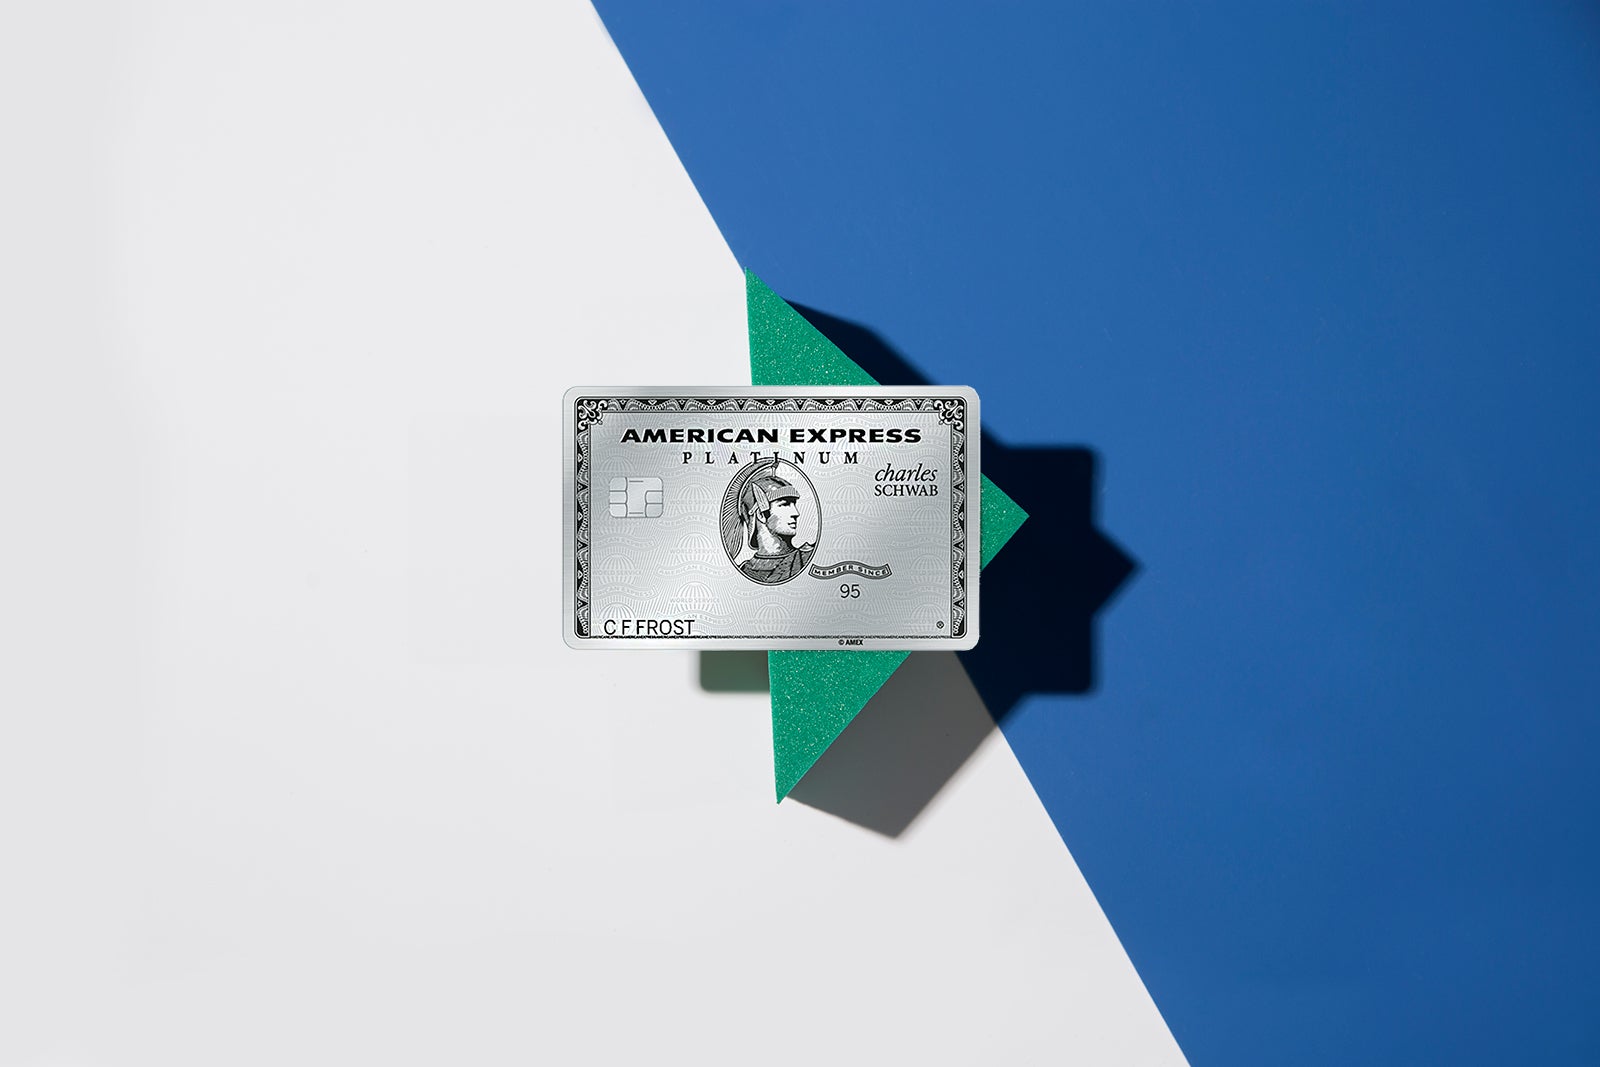 American Express Amex Platinum for Charles Schwab Credit Card Still Life